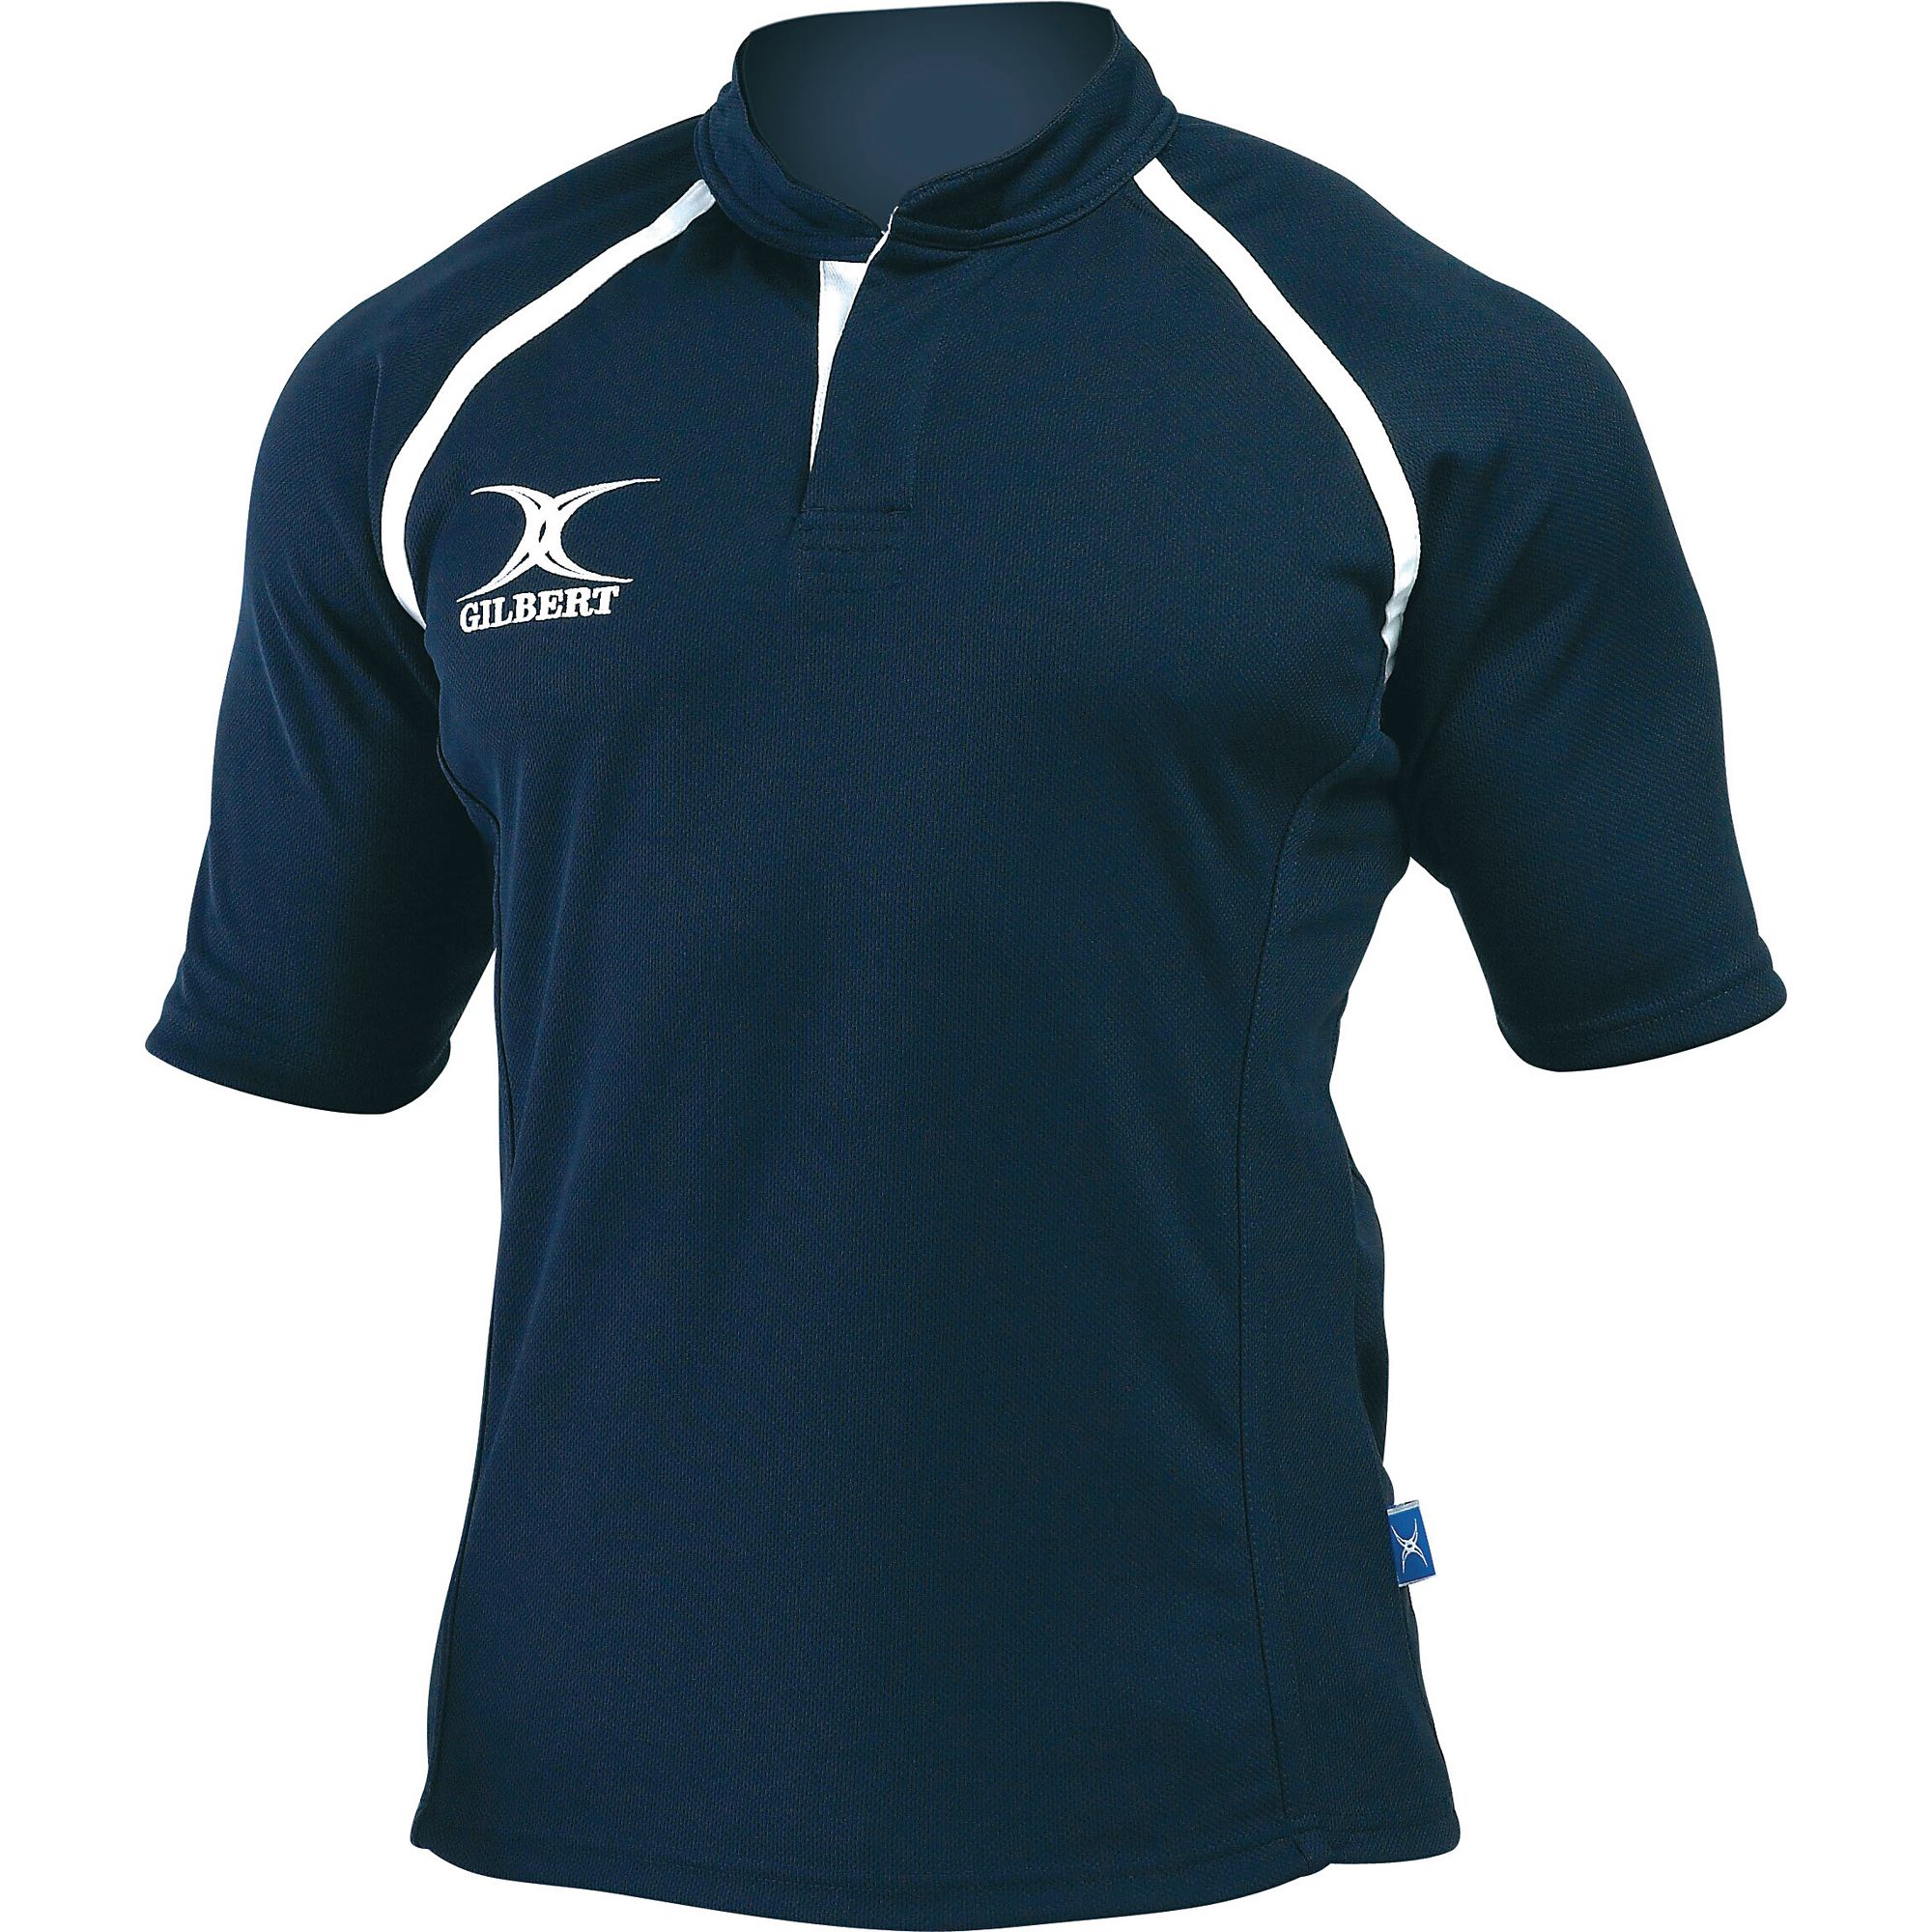 Gilbert Plain Rugby Shirt Mens 36in Navy